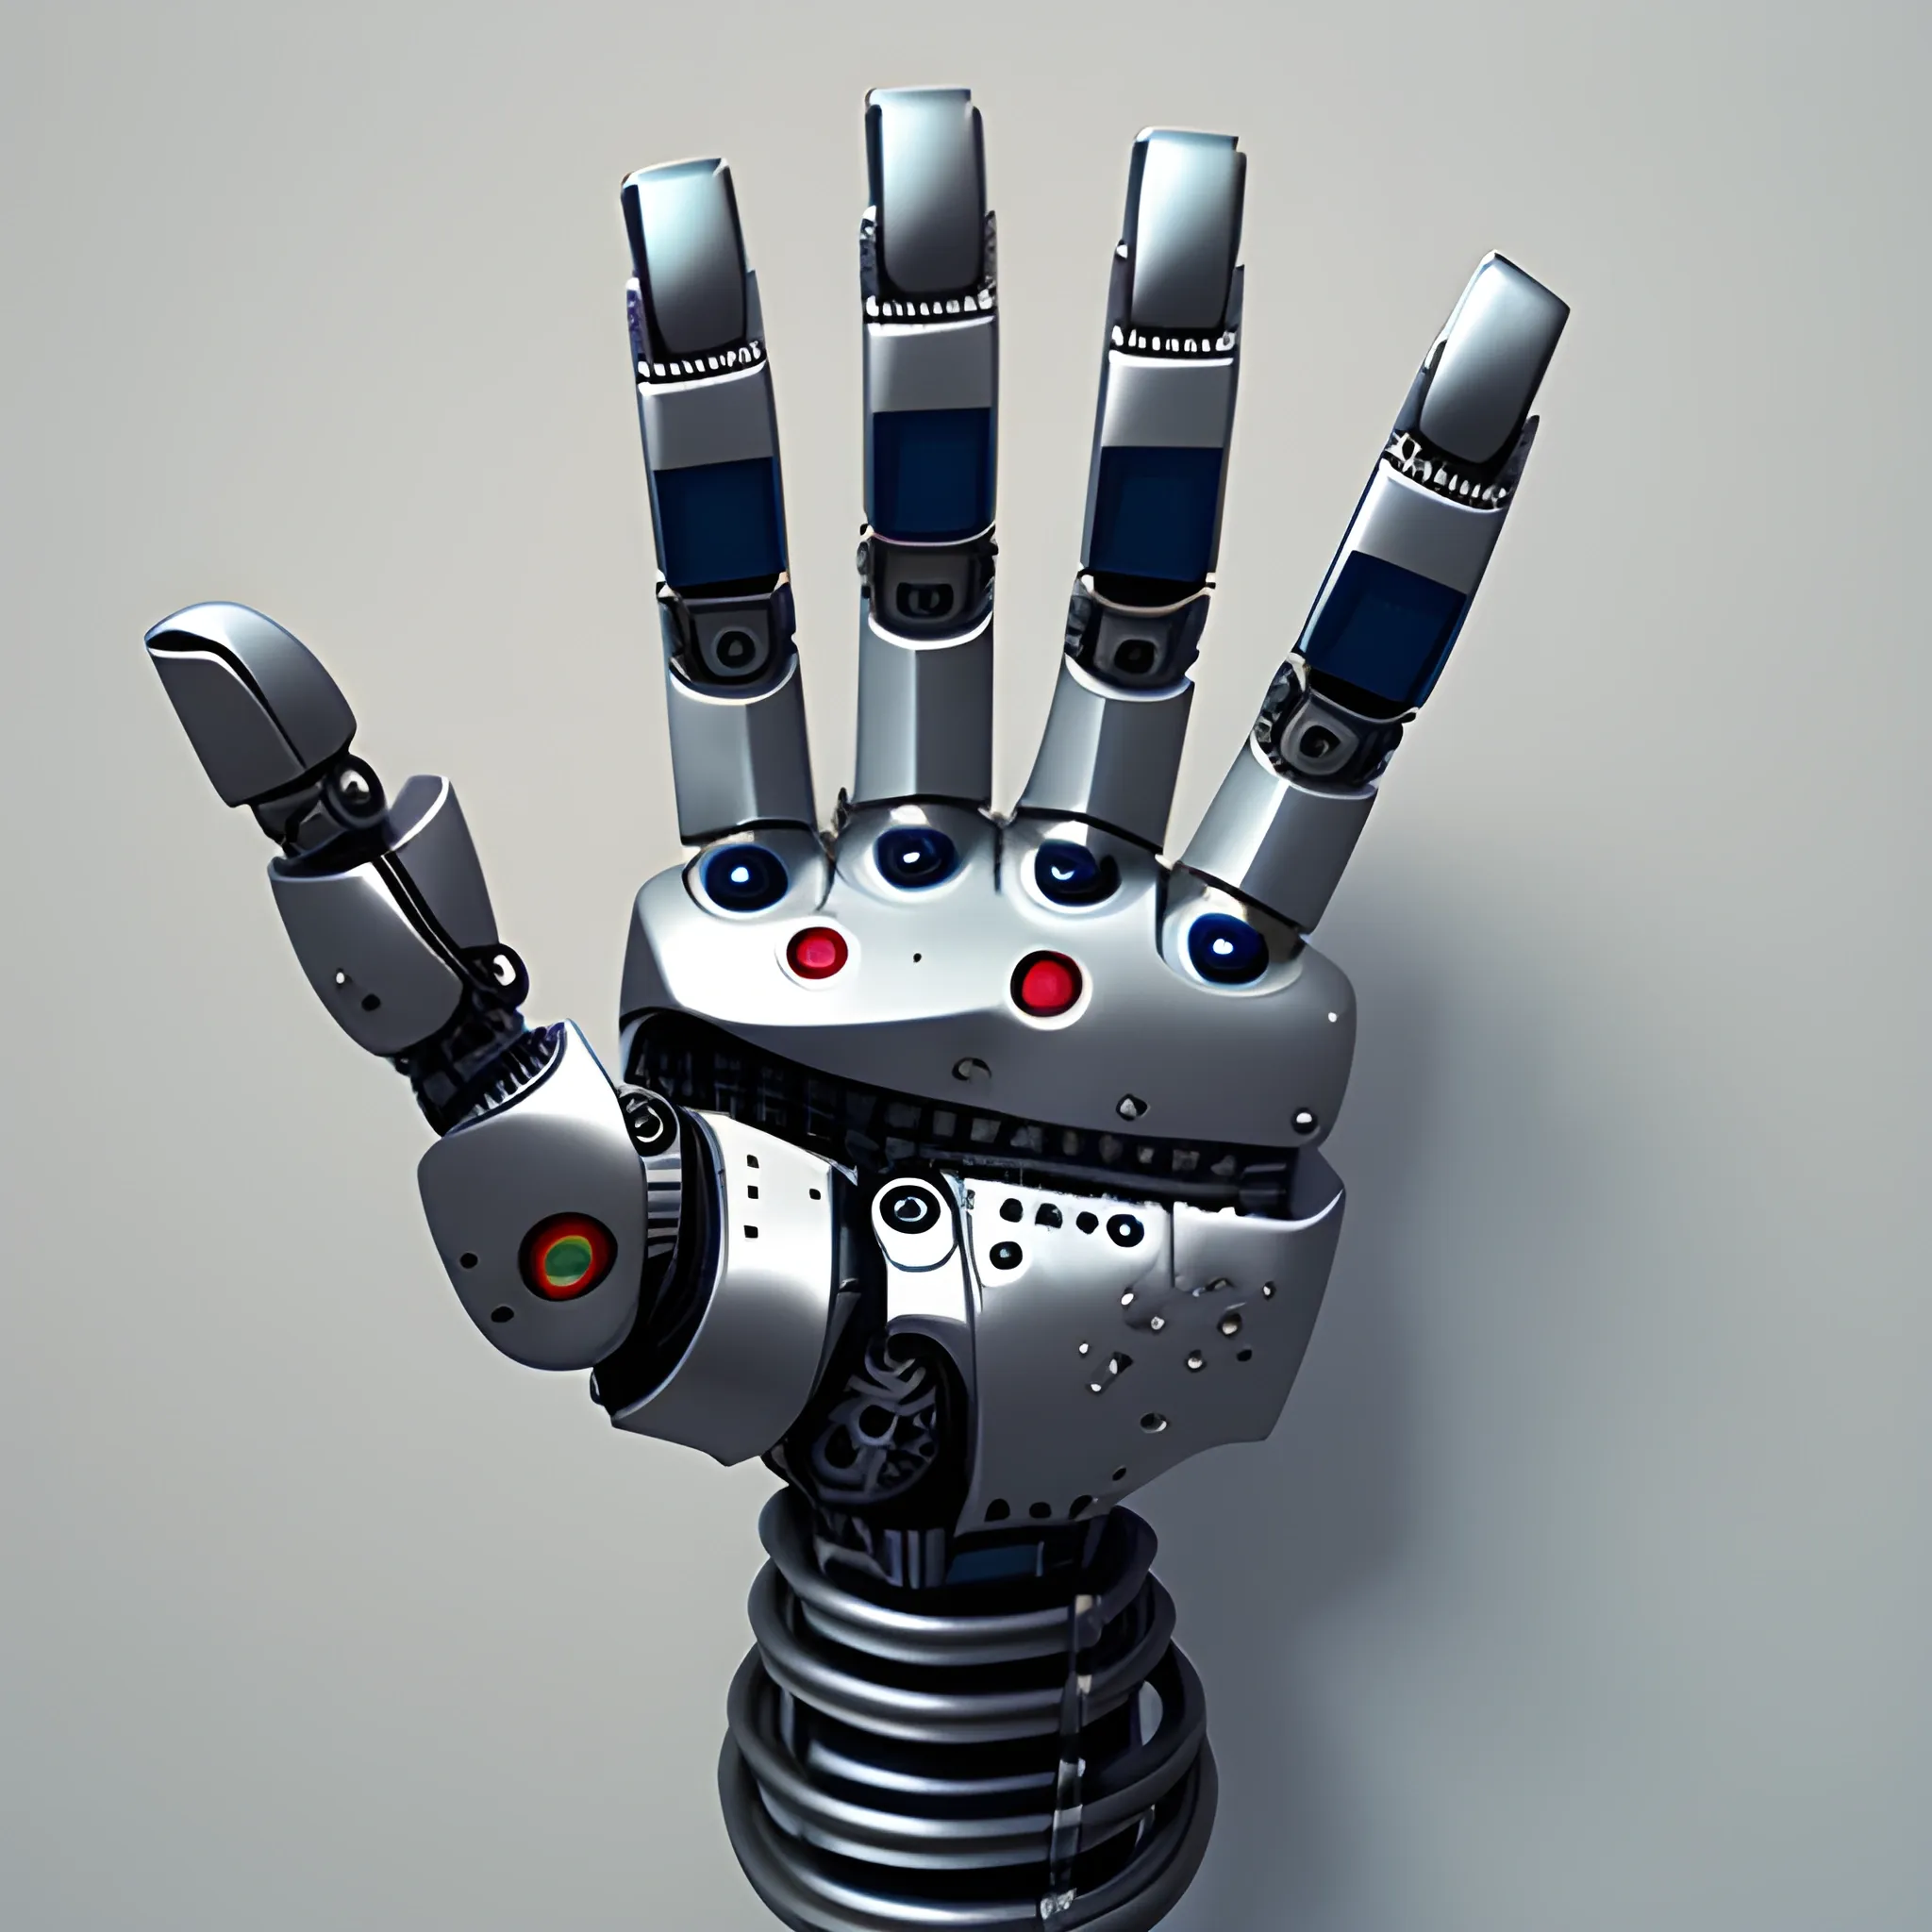 A Robot hand like